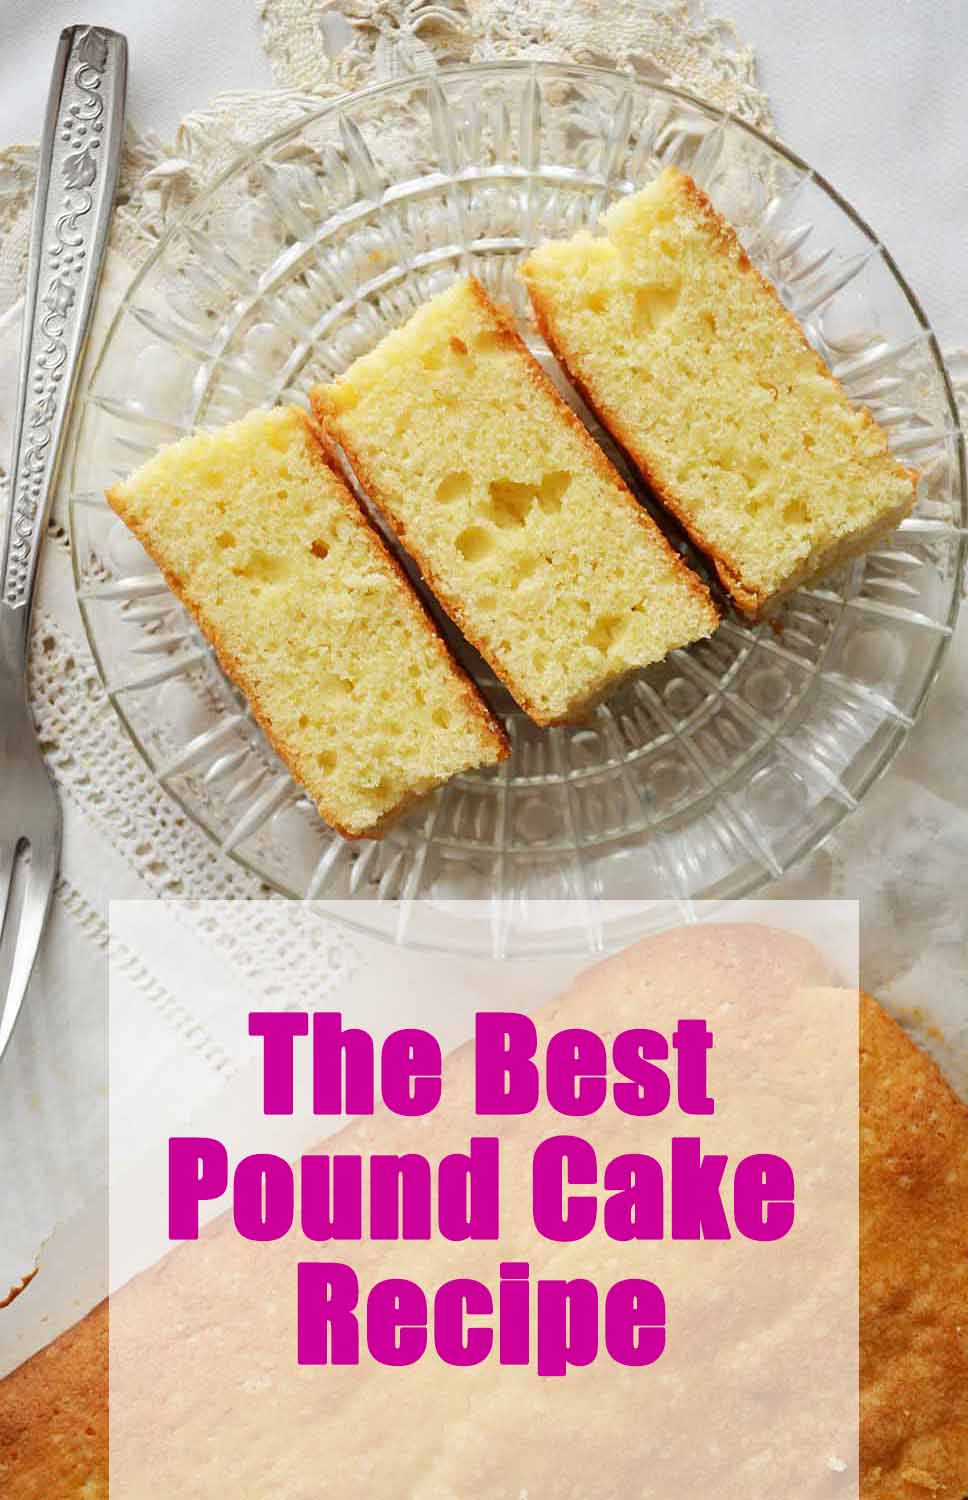 The Best Pound Cake Recipe Myreille Recipes 